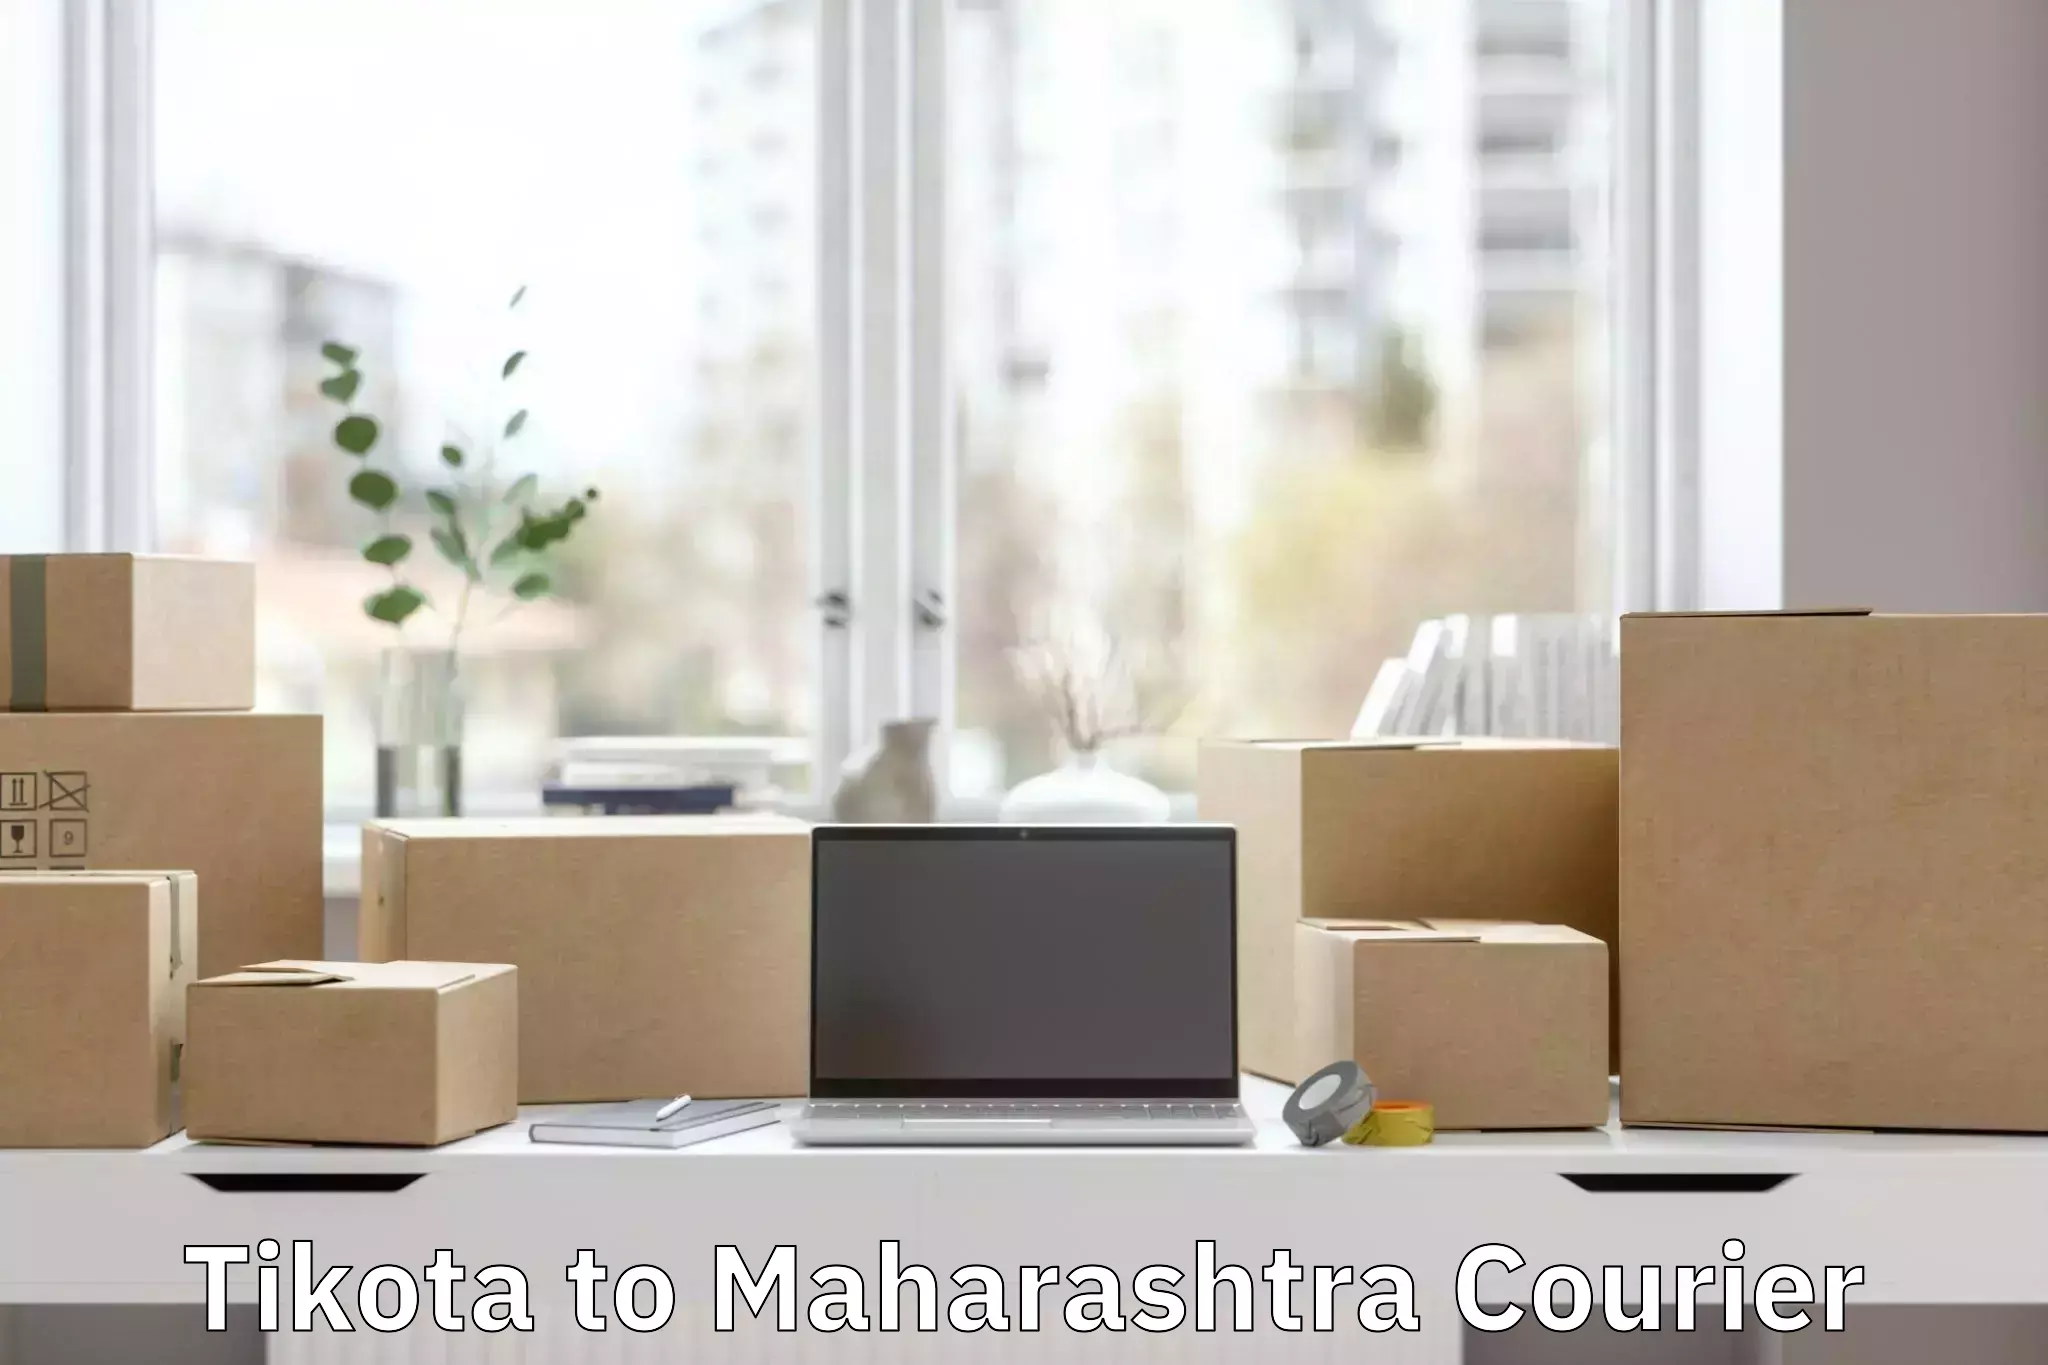 Automated luggage transport Tikota to Maharashtra